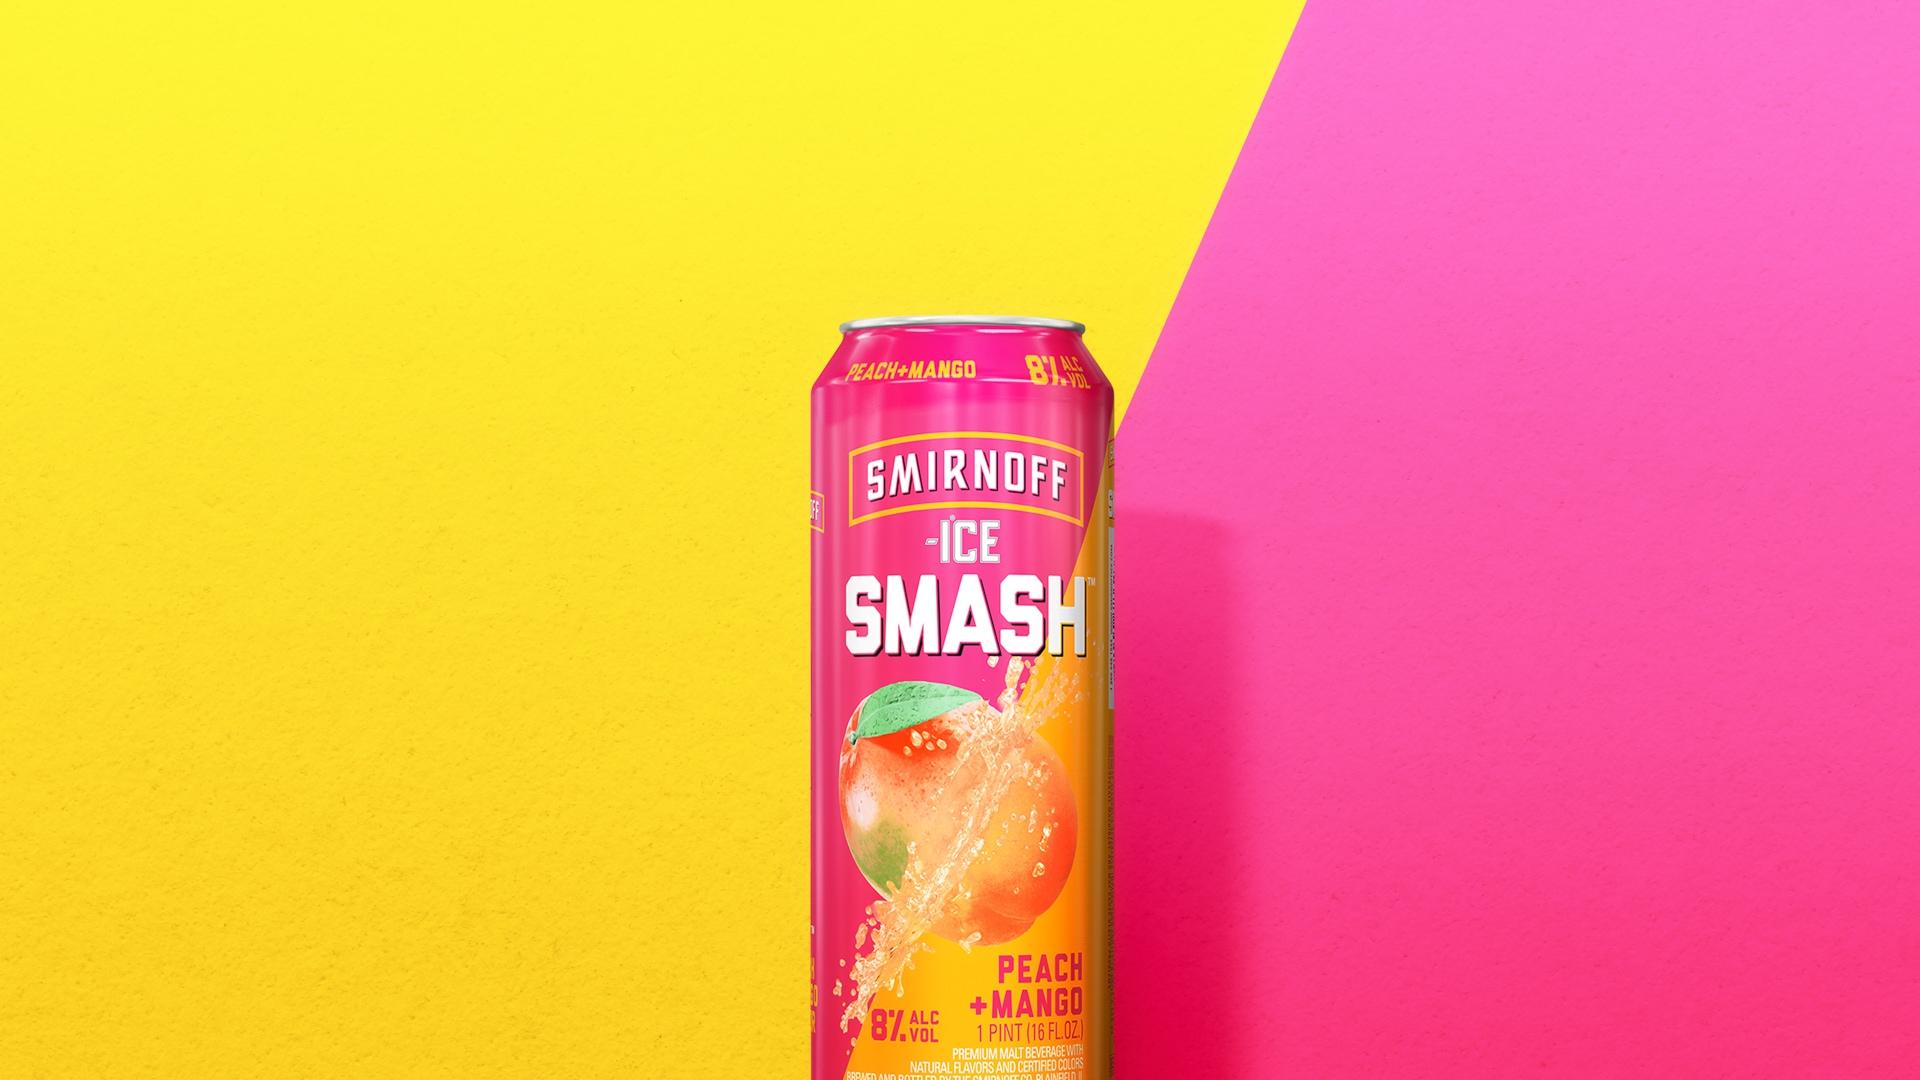 Smirnoff Ice Smash Peach + Mango on a two tone background